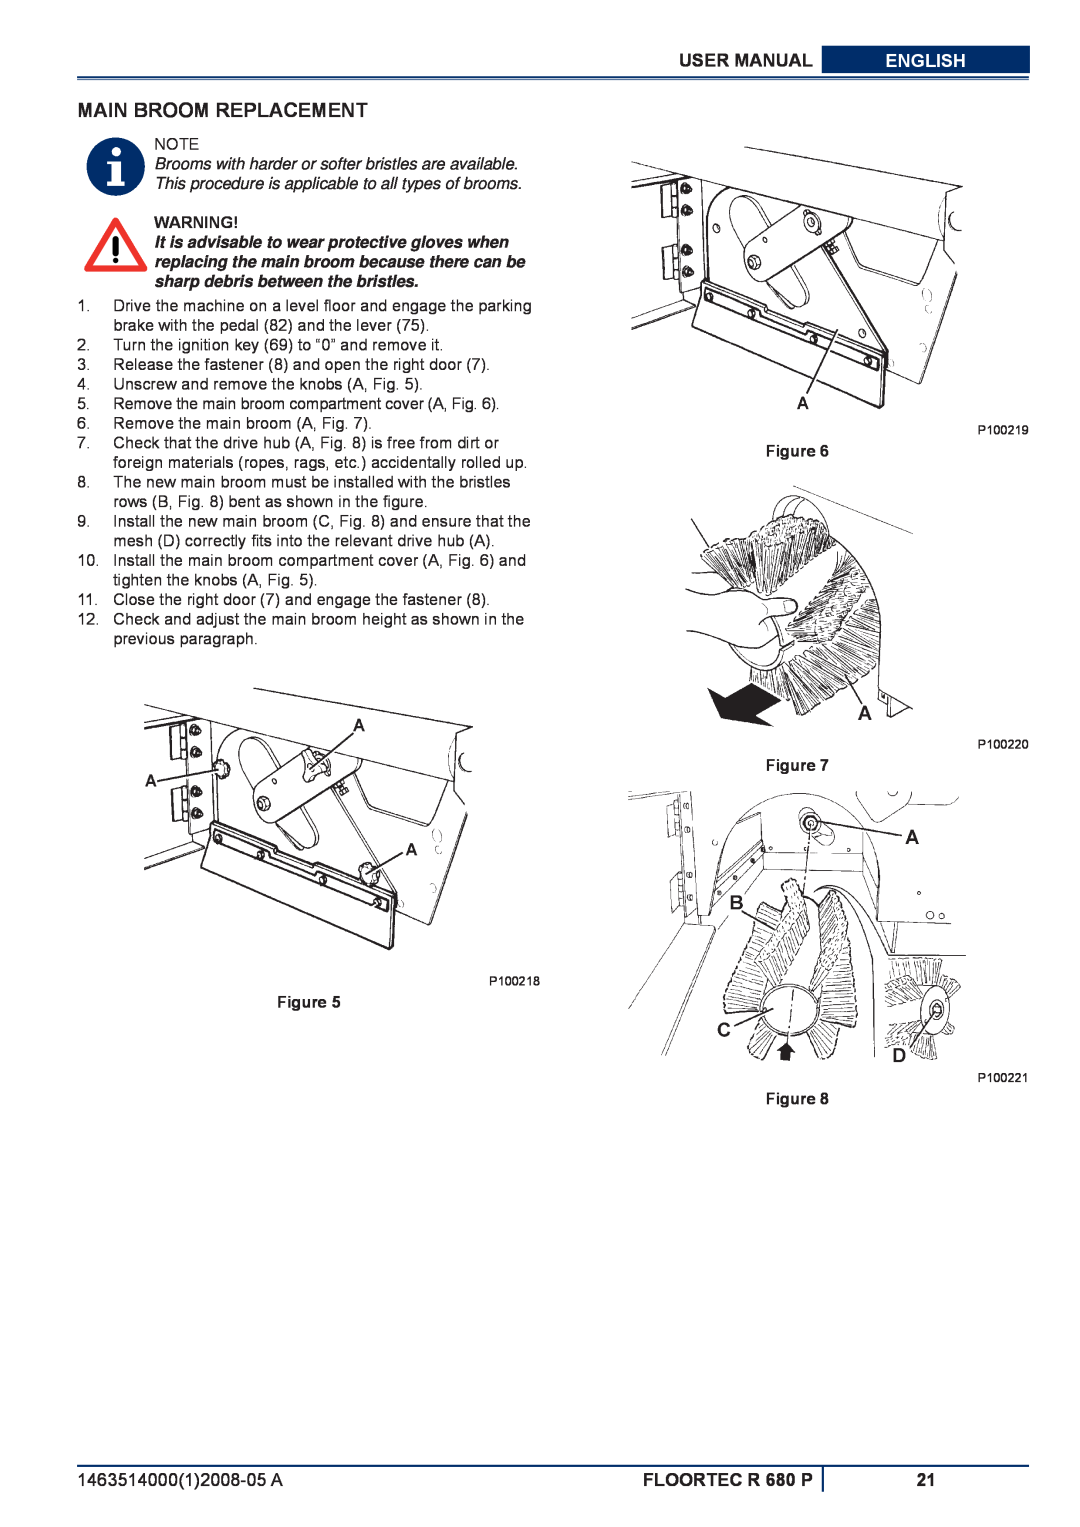 Nilfisk-ALTO manuel dutilisation Main Broom Replacement, User Manual, English, FLOORTEC R 680 P, Figure 